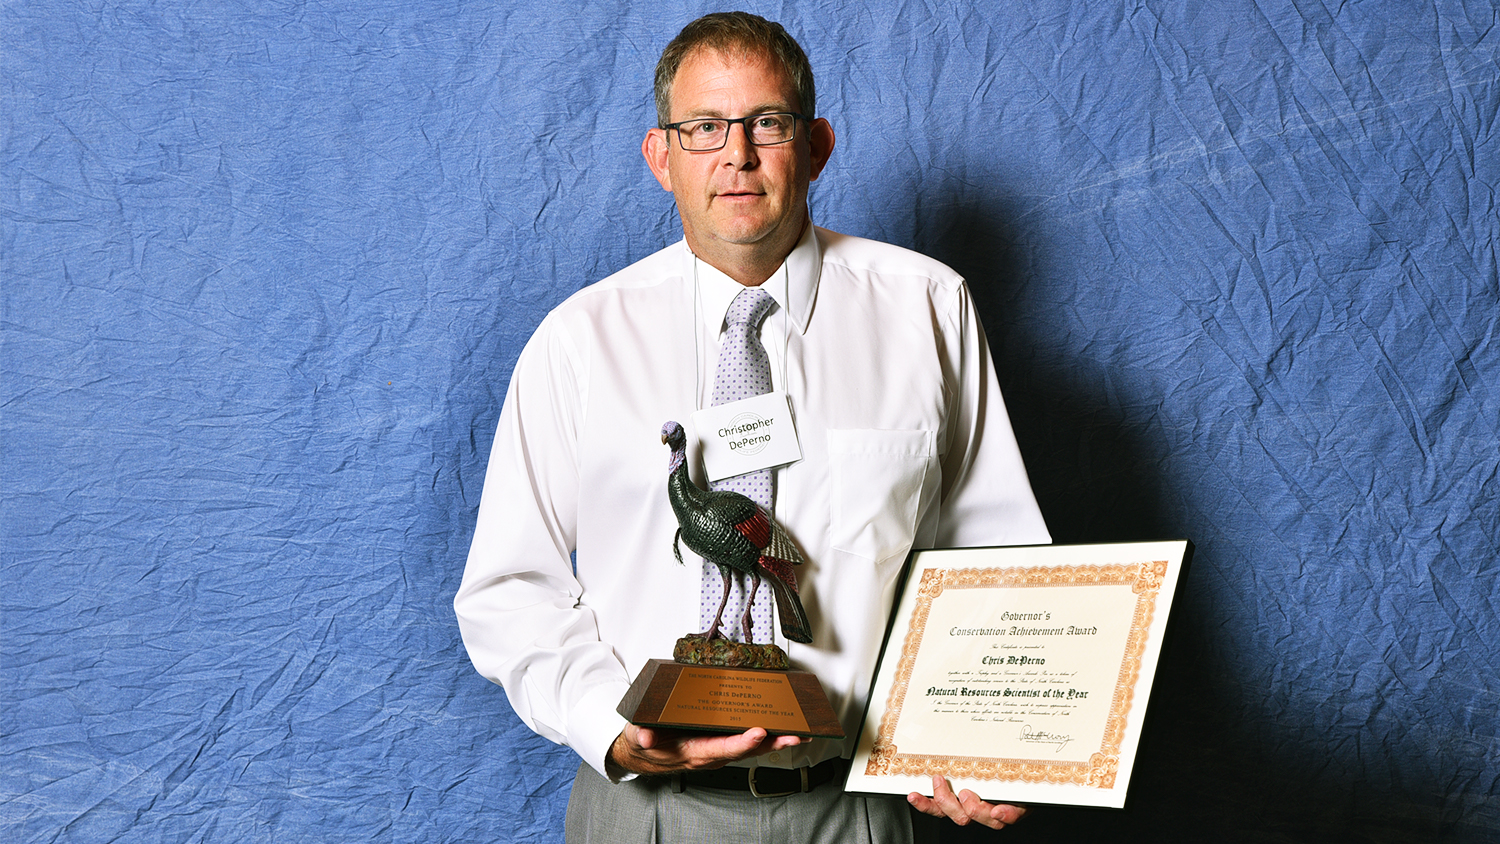 Chris DePerno and Award